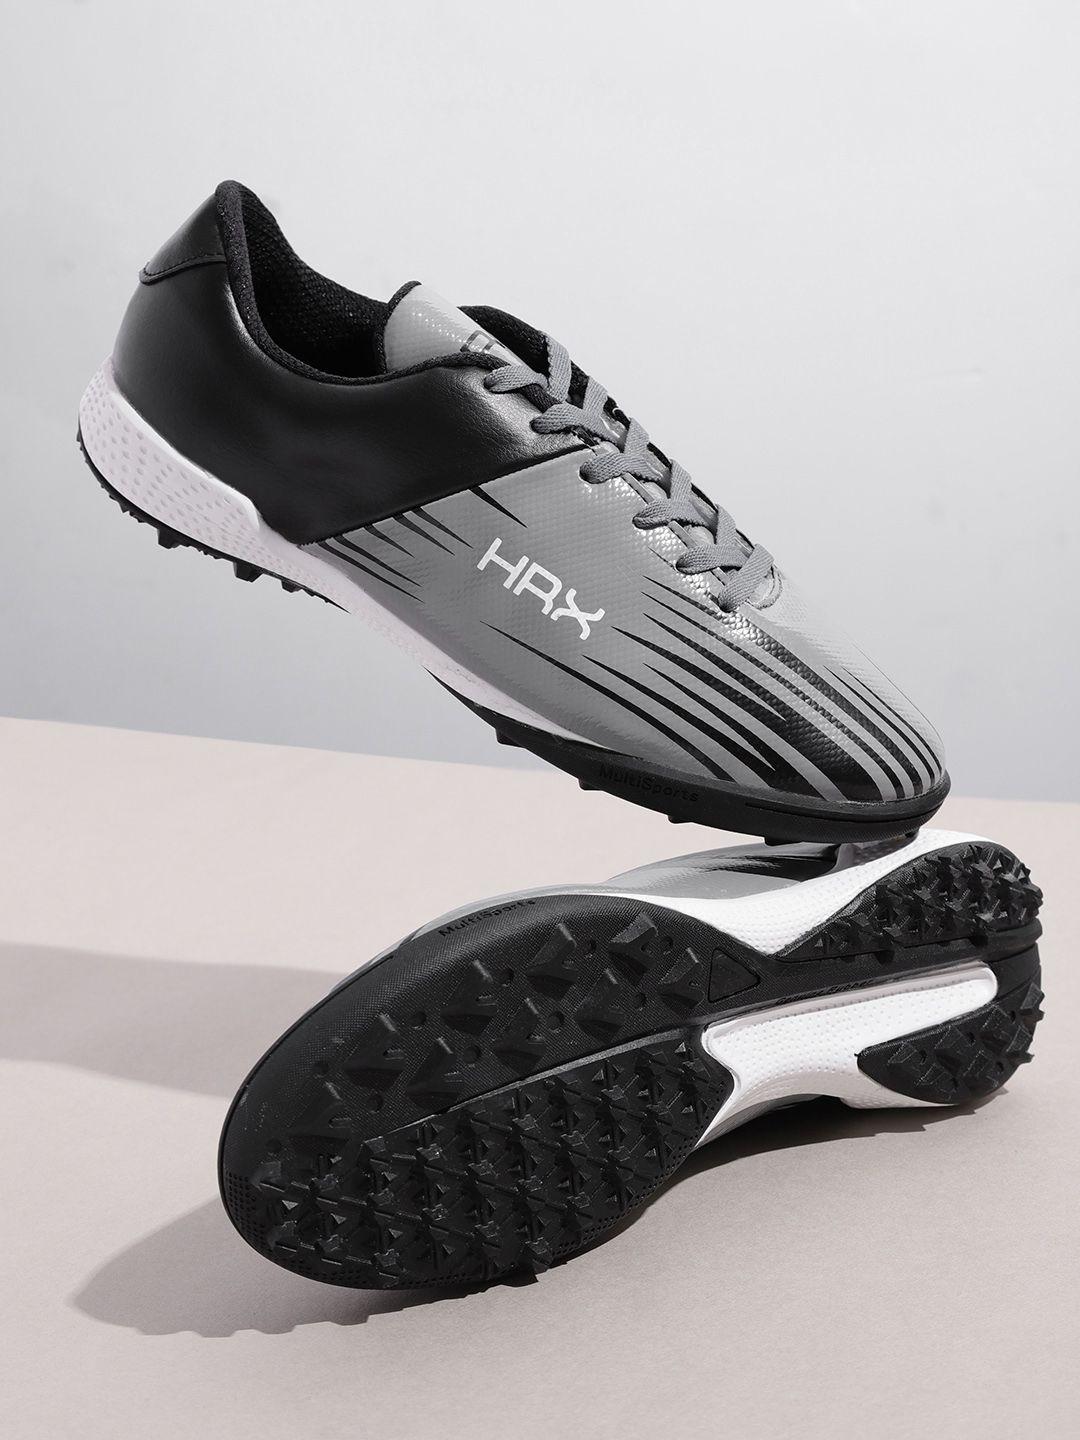 hrx by hrithik roshan unisex grey & black football shoes